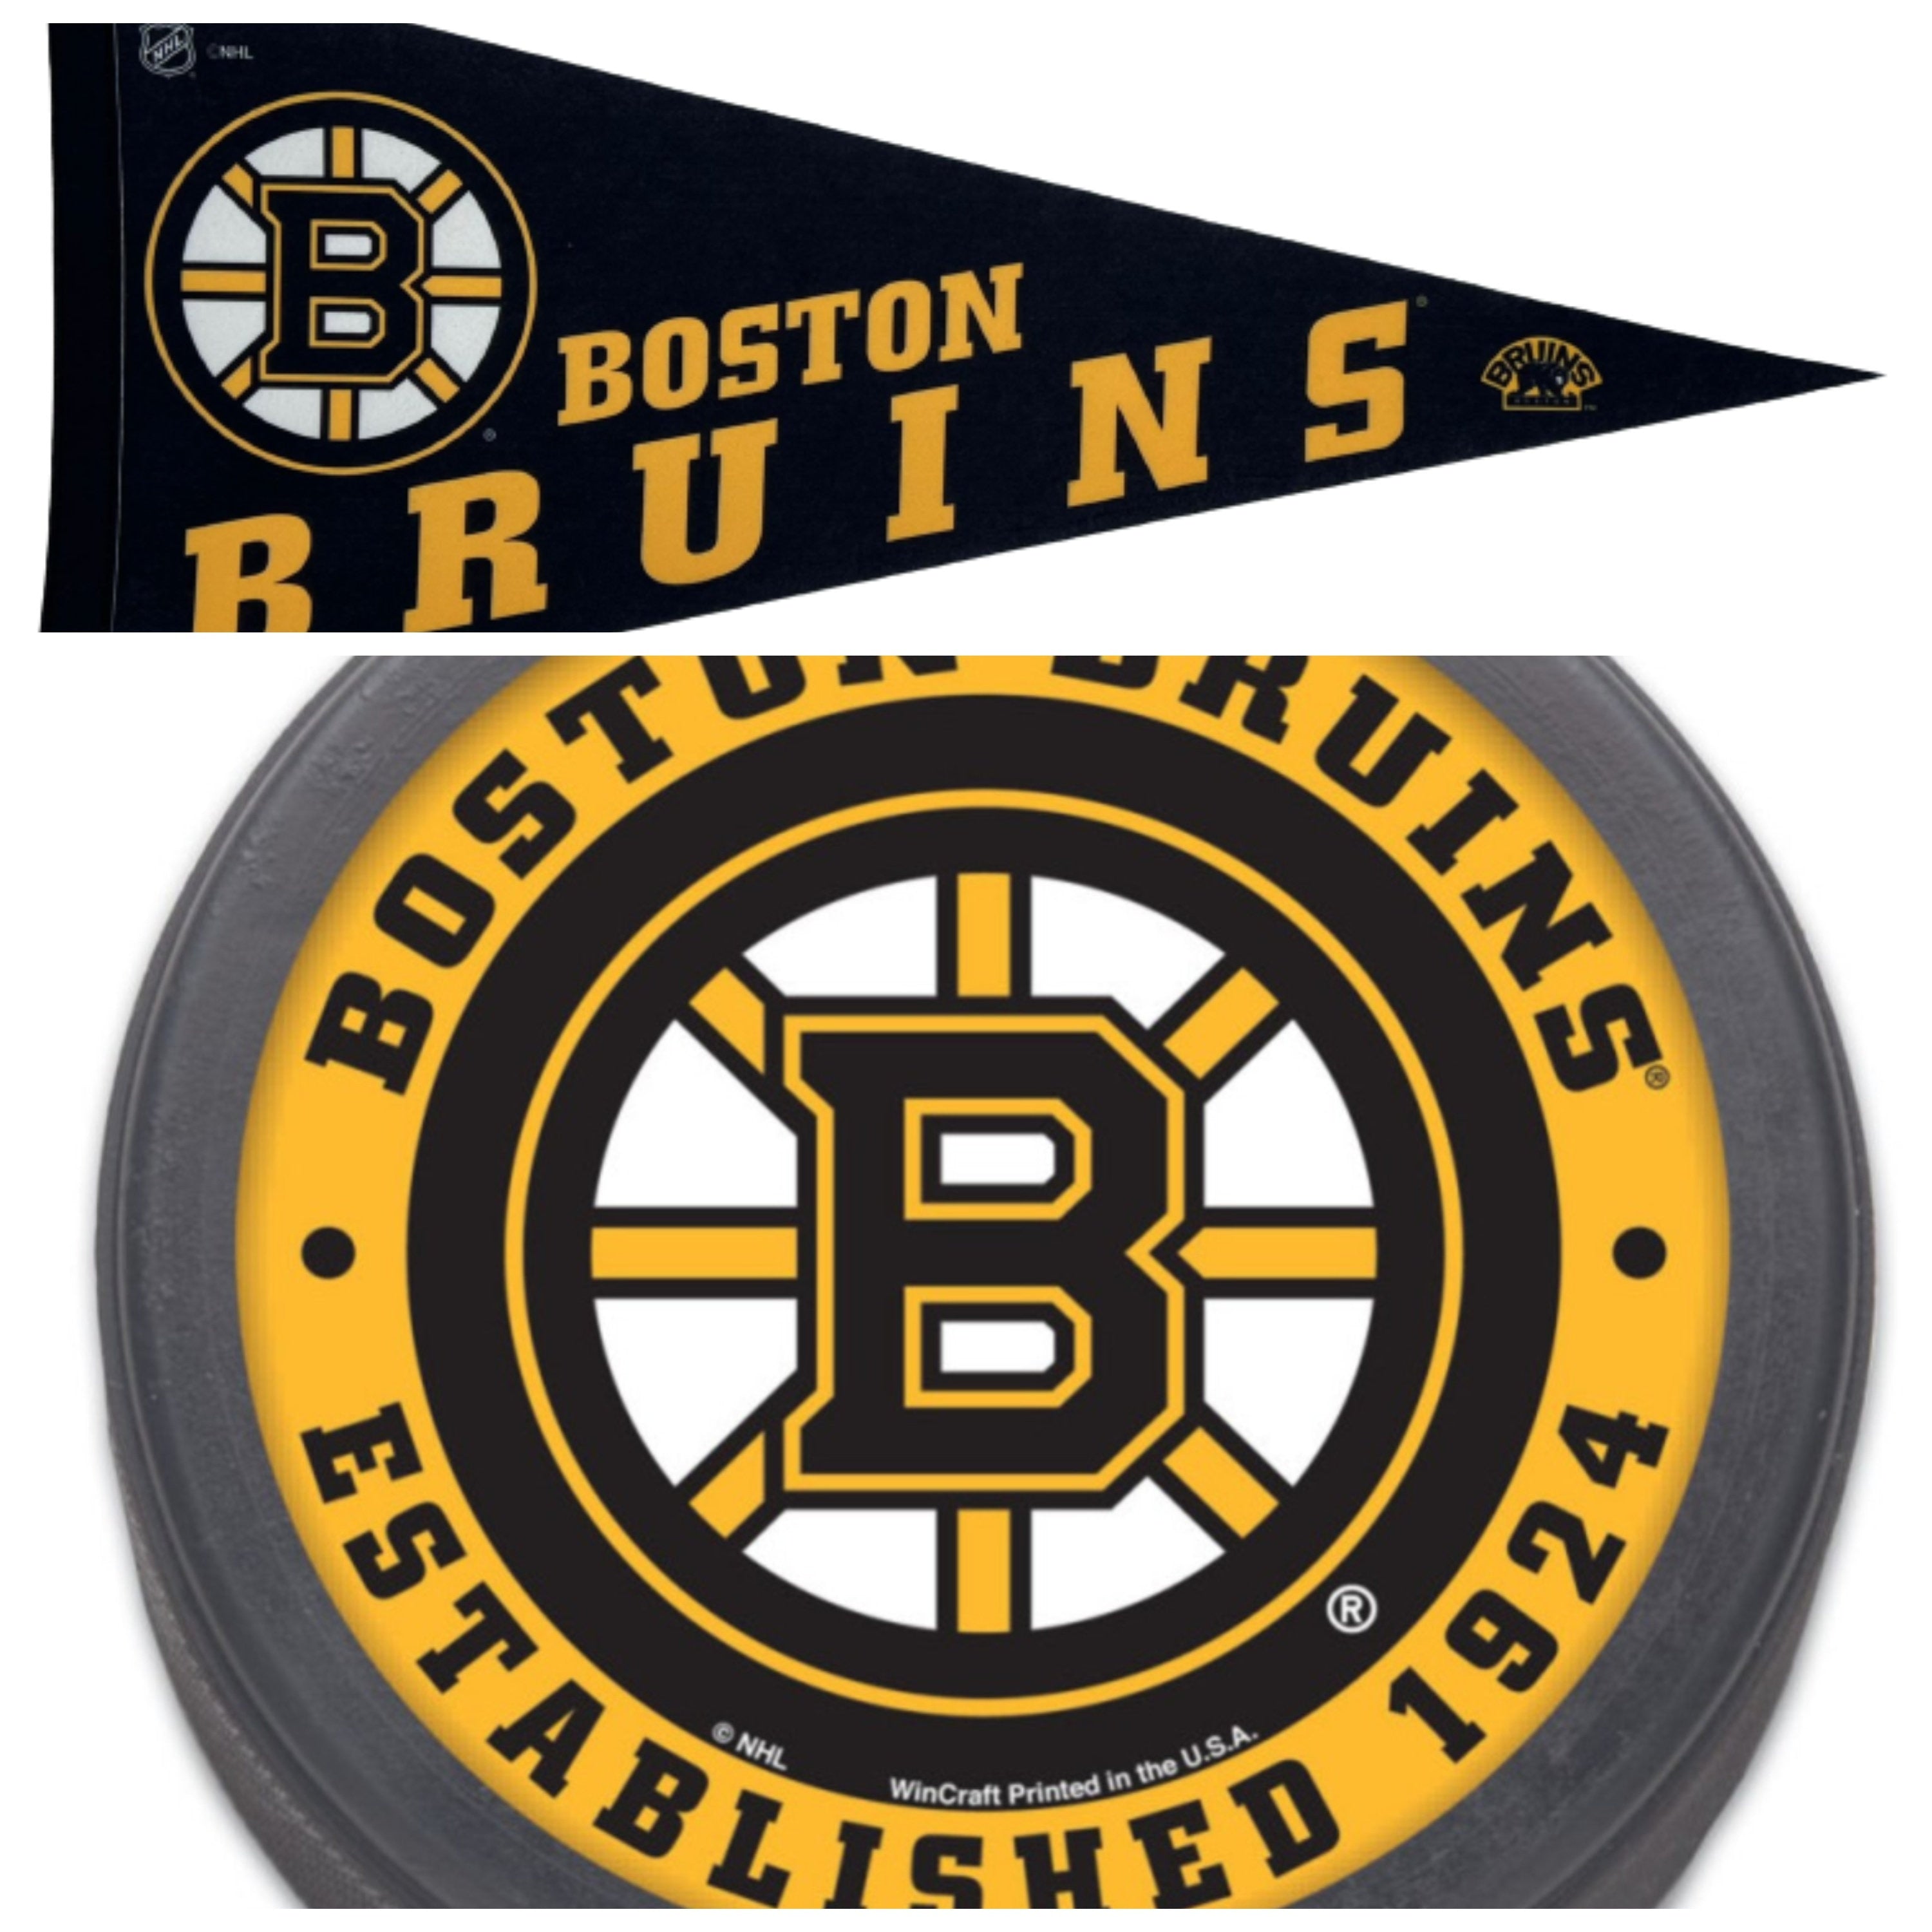 Boston bruins pennant nhl pennants vaantje vlaggetje fanion flag ice hockey flag ijshockey usa ice boston hockey souvenir wall decor bruins - Logo